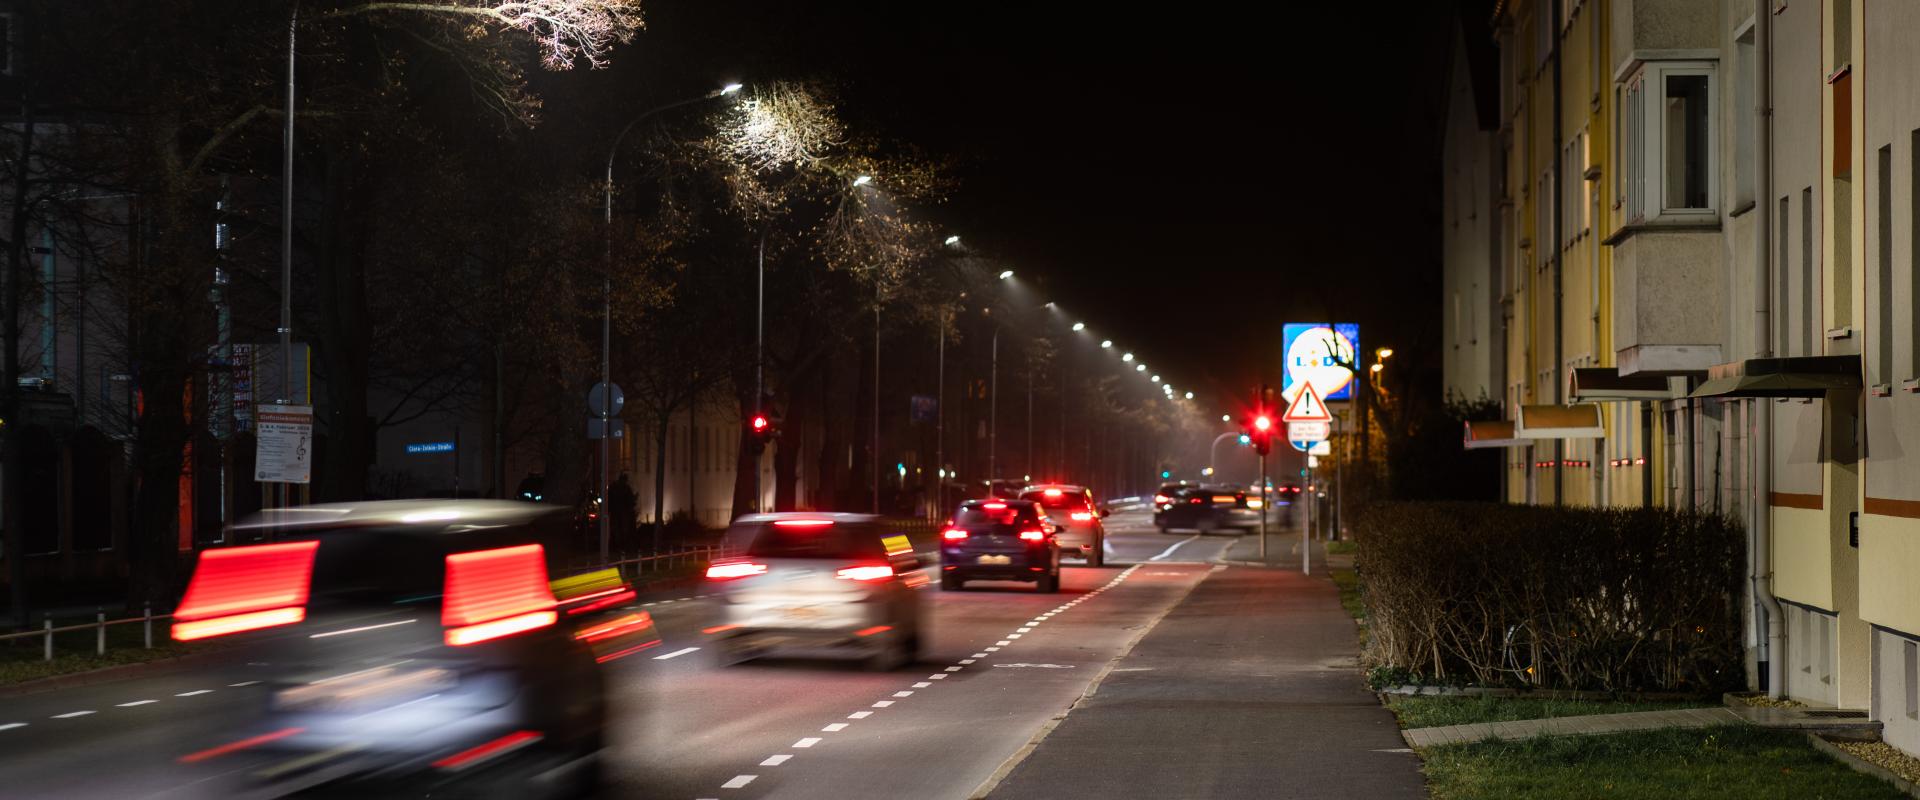 Street lighting 